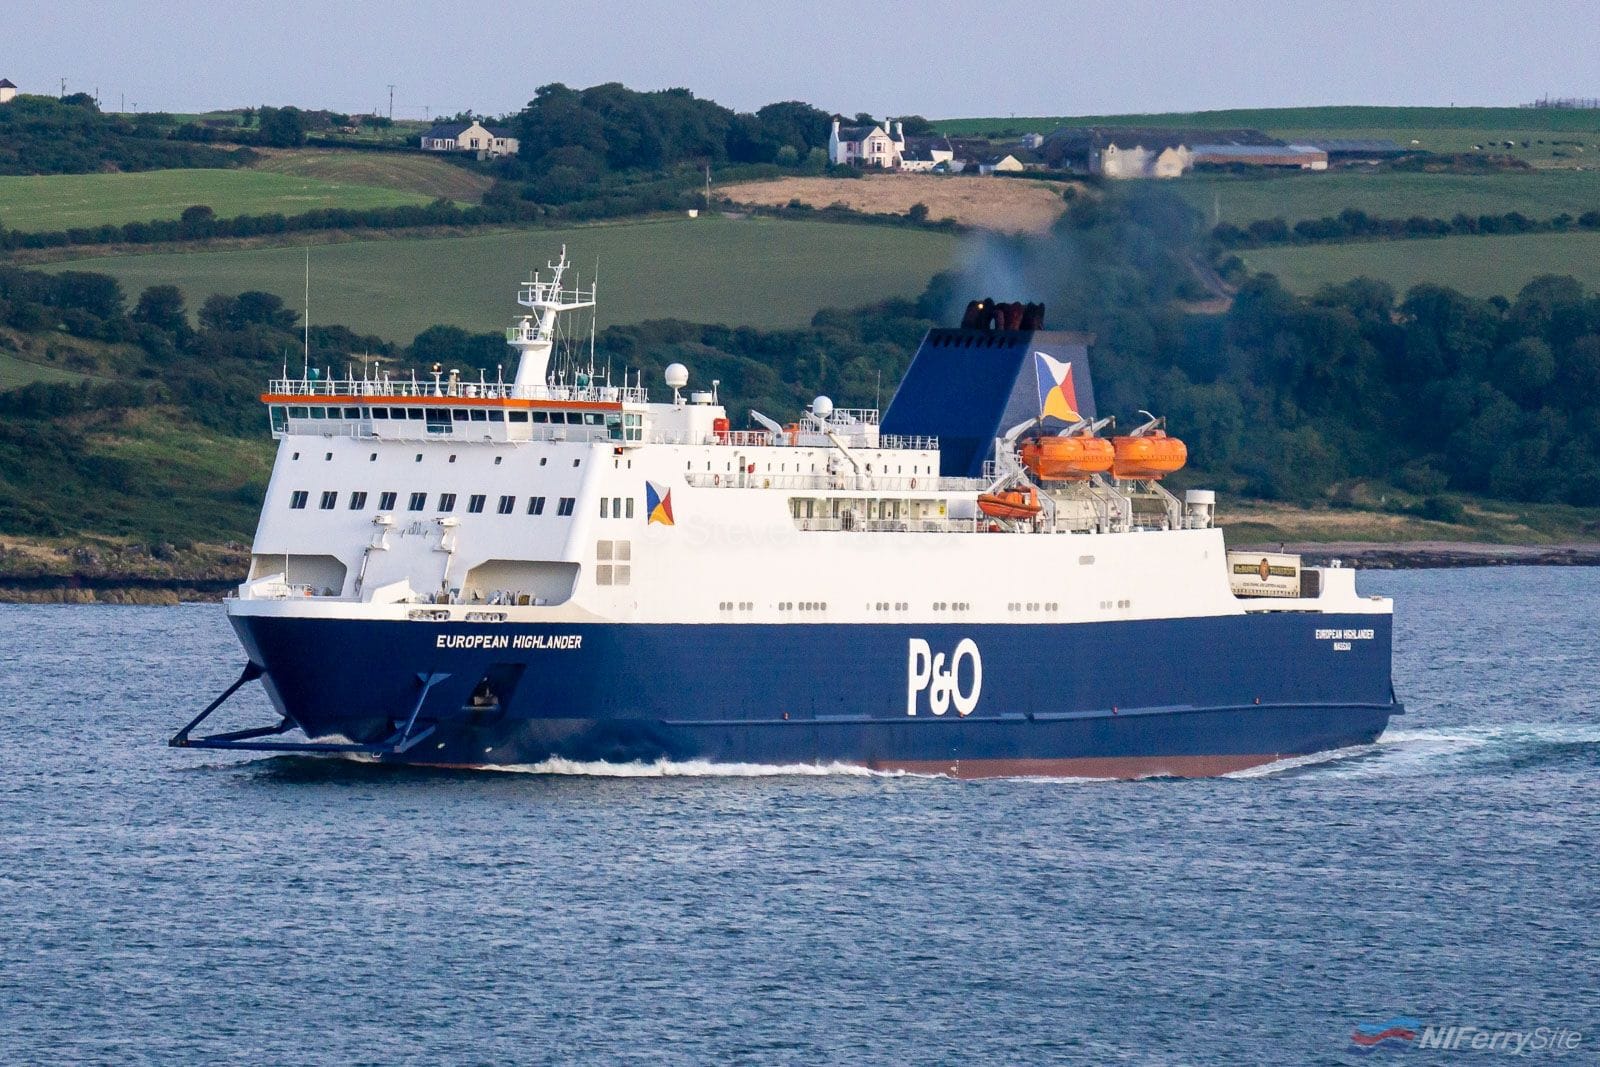 P&O Ferries EUROPEAN HIGHLANDER makes her way past Loch Ryan Port towards Cairnryan on her 04:00 sailing from Larne, 03.08.19. Copyright © Steven Tarbox.